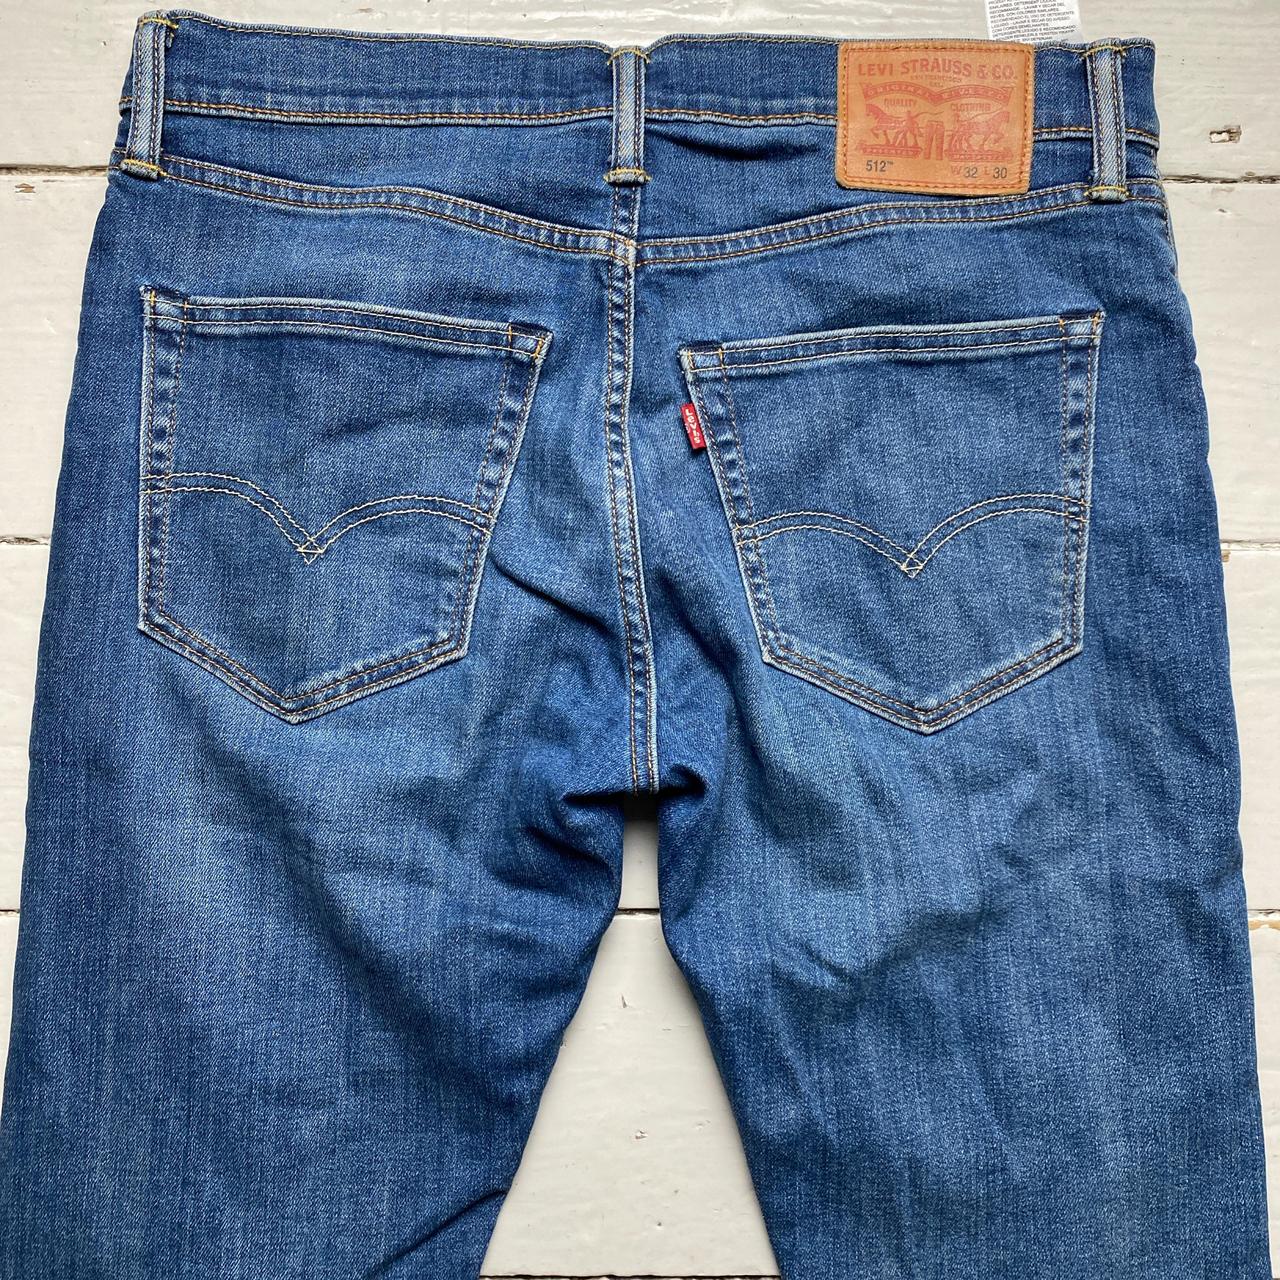 Levis 512 Slim Navy Blue Jeans